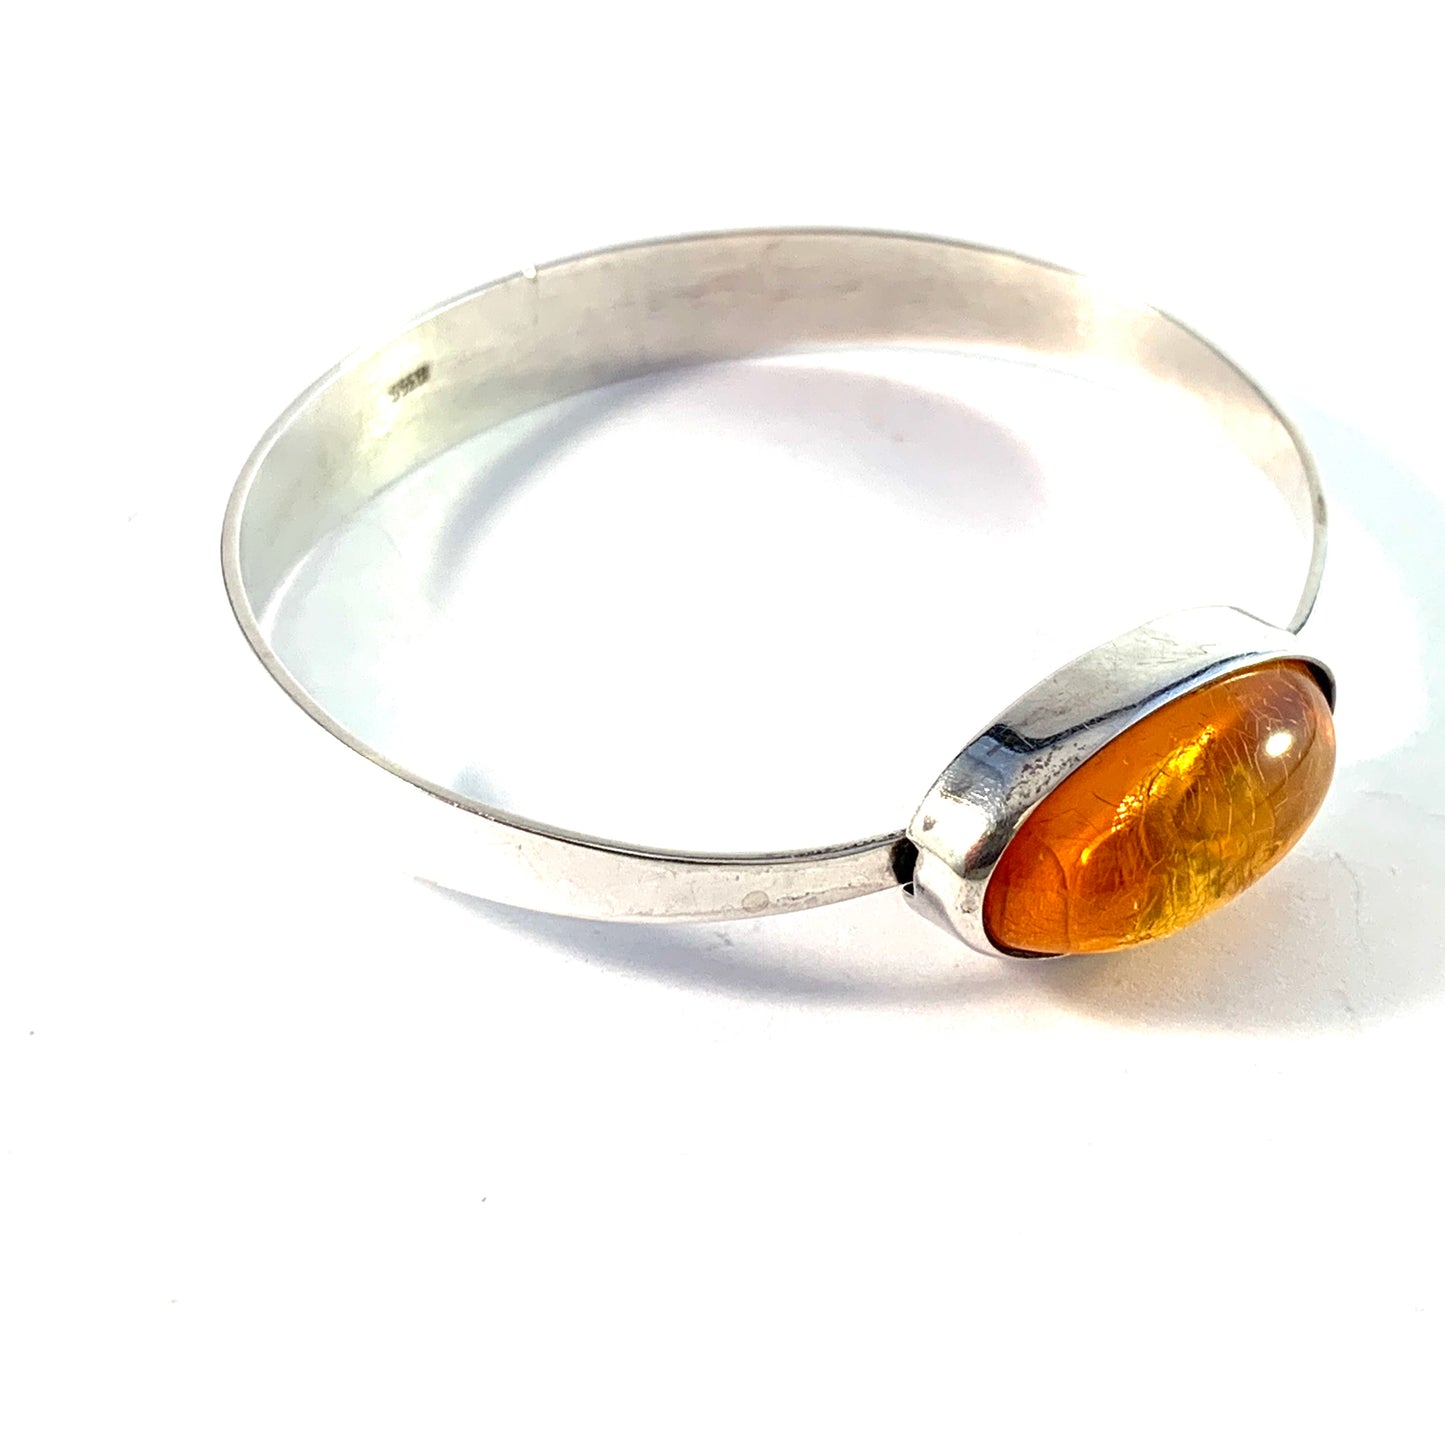 Vintage 1960s Solid 835 Silver Baltic Amber Open/Close Bangle Bracelet.